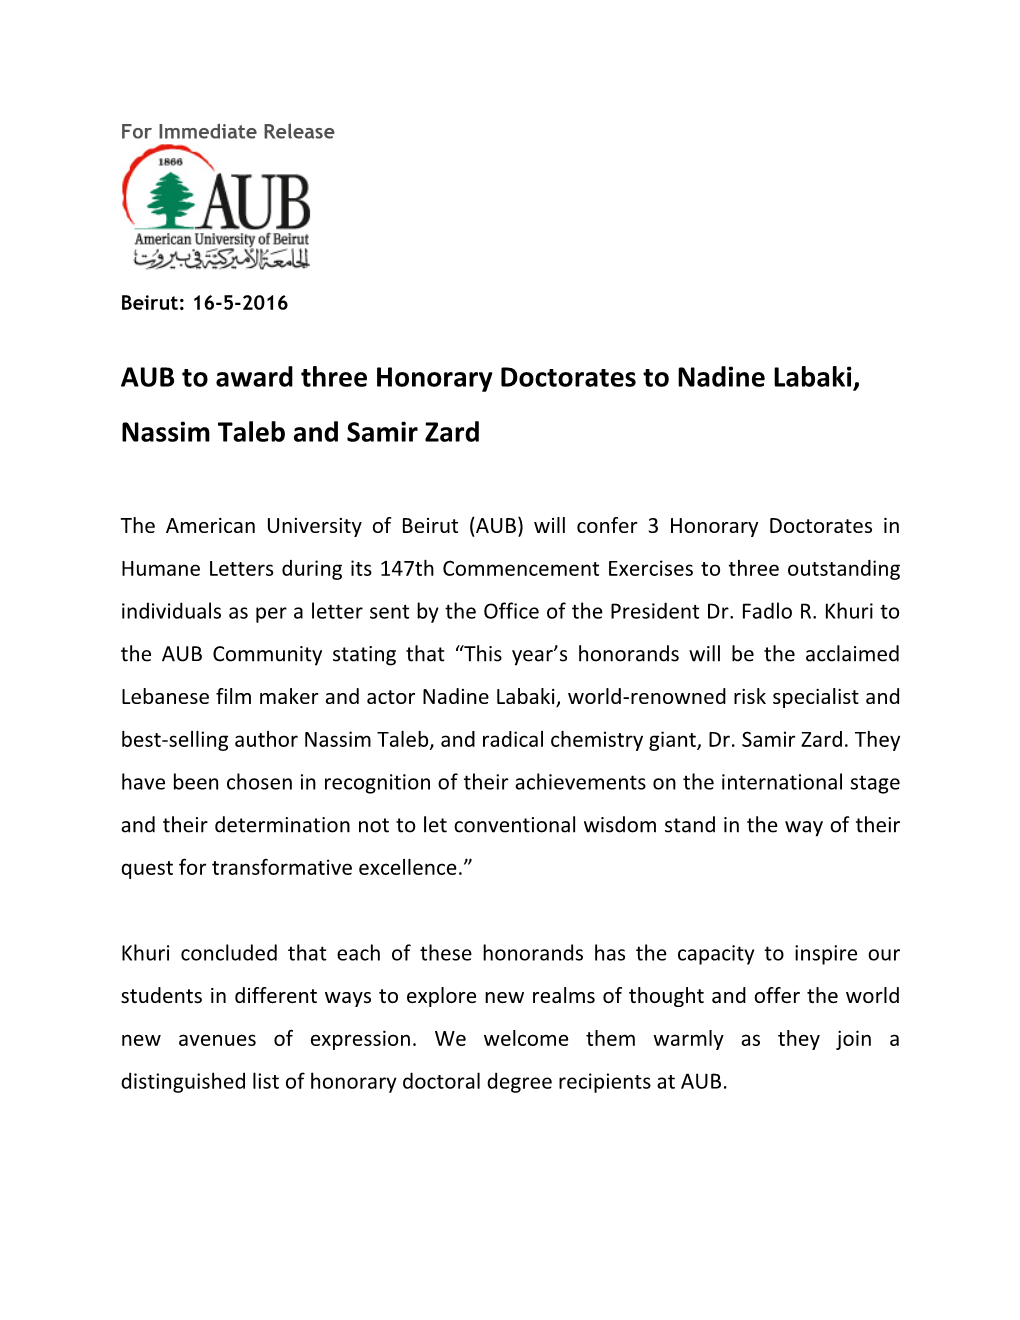 AUB to Award Three Honorary Doctorates to Nadine Labaki, Nassim Taleb and Samir Zard